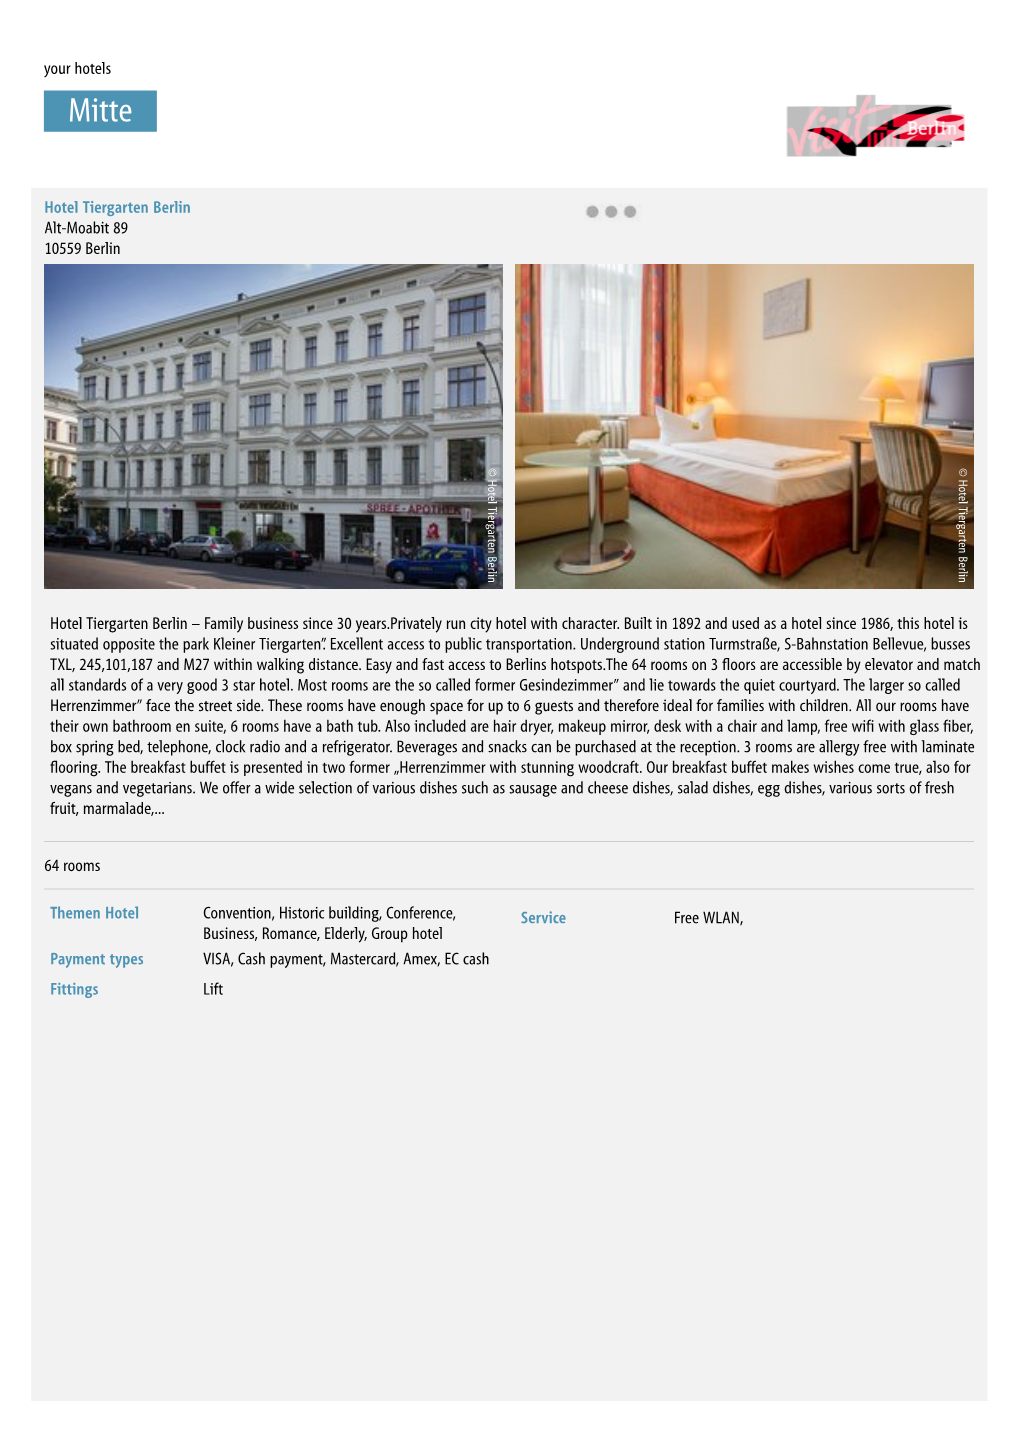 Your Hotels Hotel Tiergarten Berlin Alt-Moabit 89 10559 Berlin Hotel